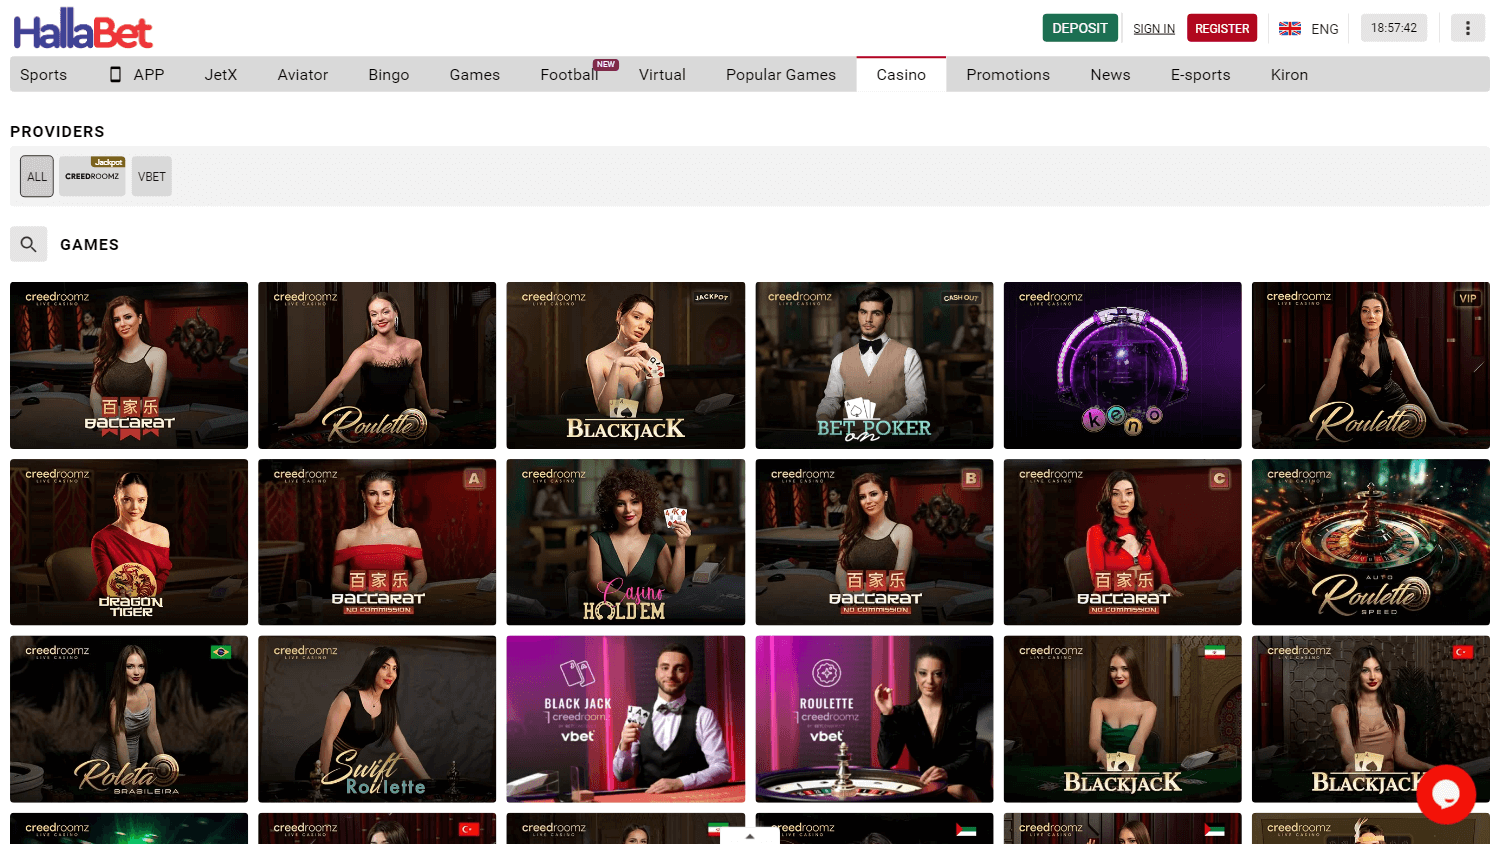 hallabet_casino_homepage_desktop